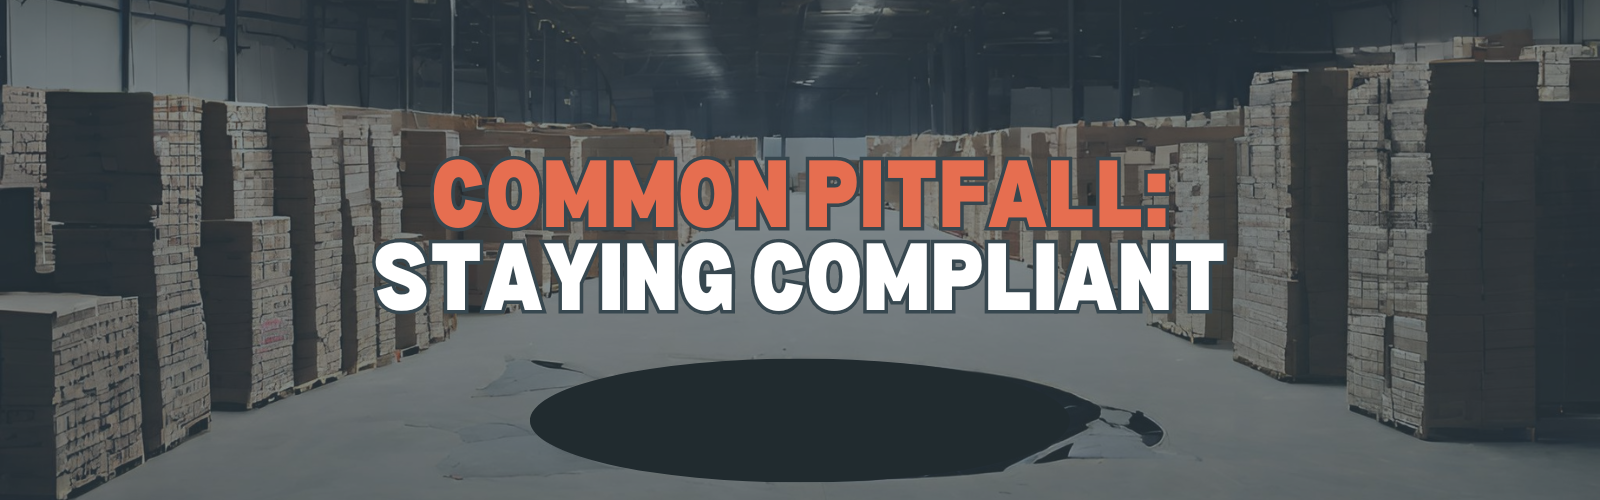 Amazon FBA - Common Pitfall - Staying Compliant with Amazon Policies